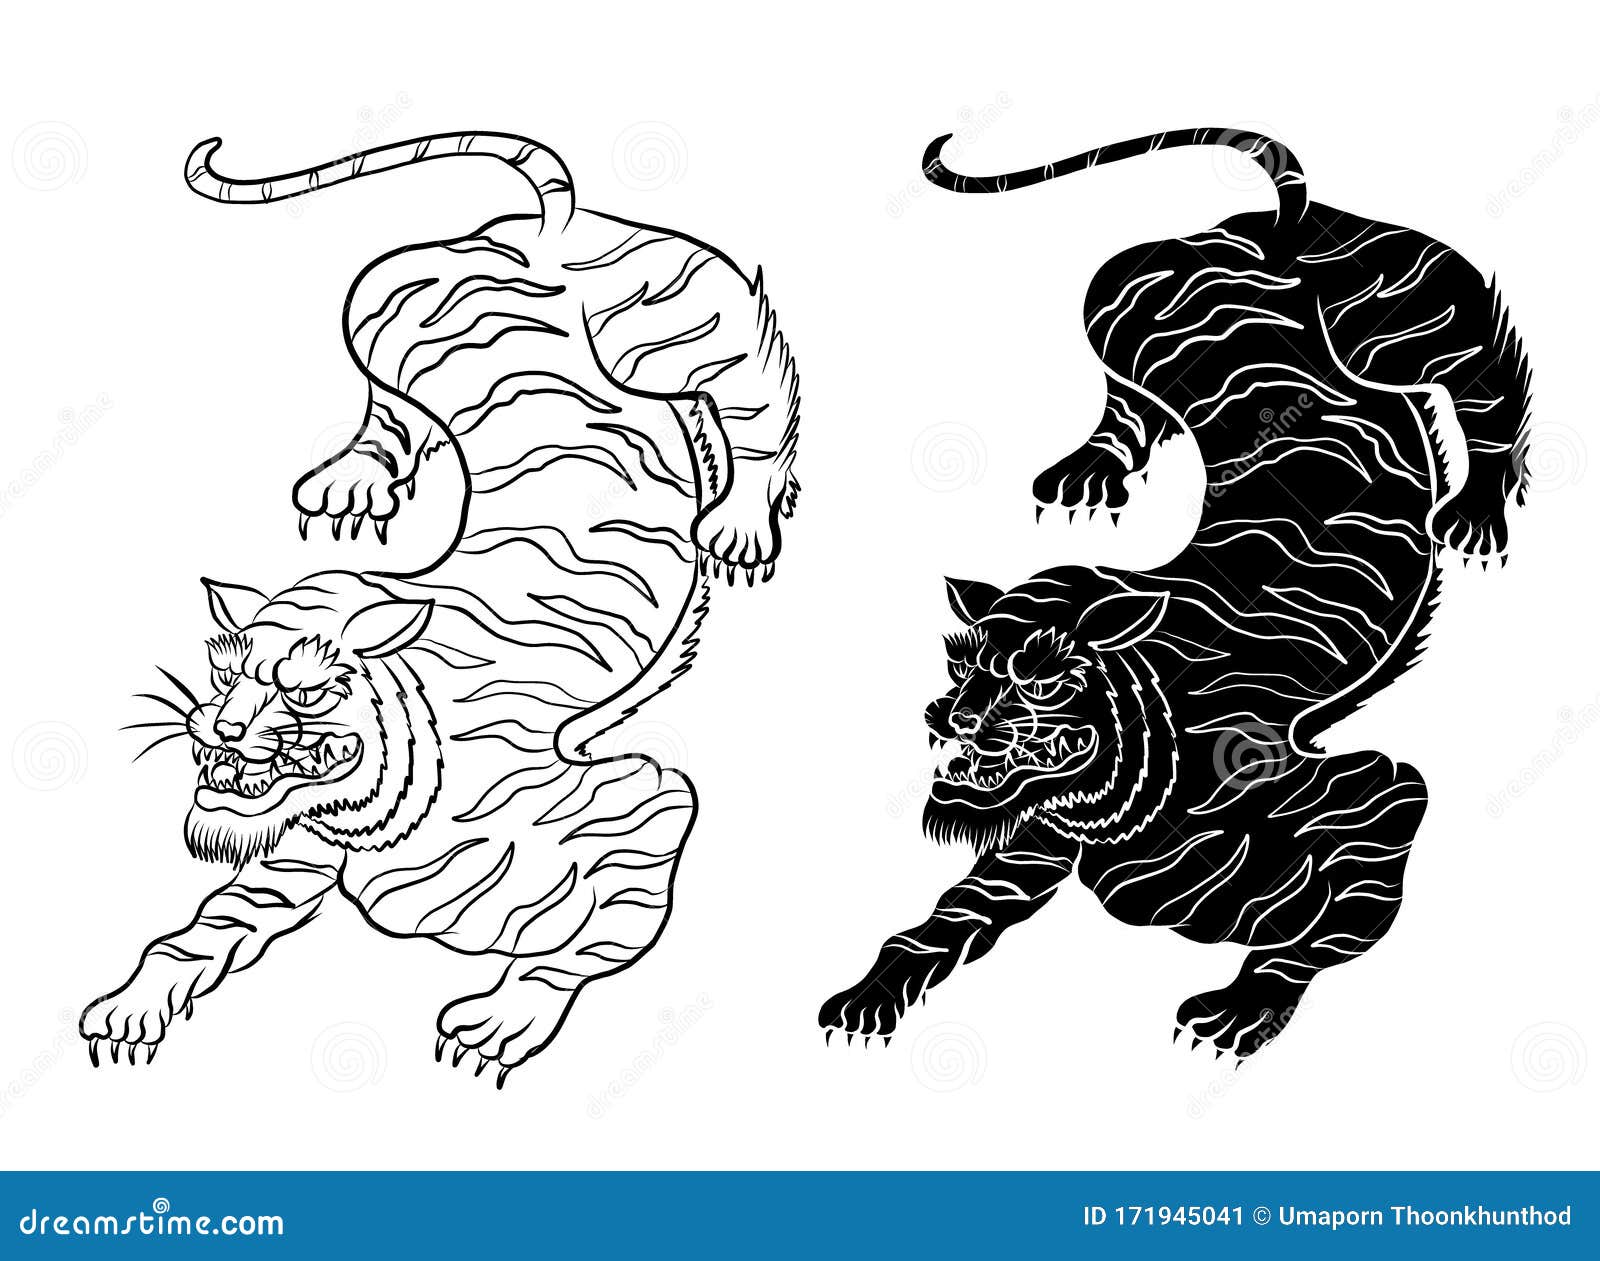 Amazon.com : 6 Sheets Black Tiger Lion Temporary Tattoo, Arm Chest Leg  Tattoo Sticker for Men Women, Wild Beast Animal Designs Body Art on Back  Shoulder Waterproof Large Size : Beauty &